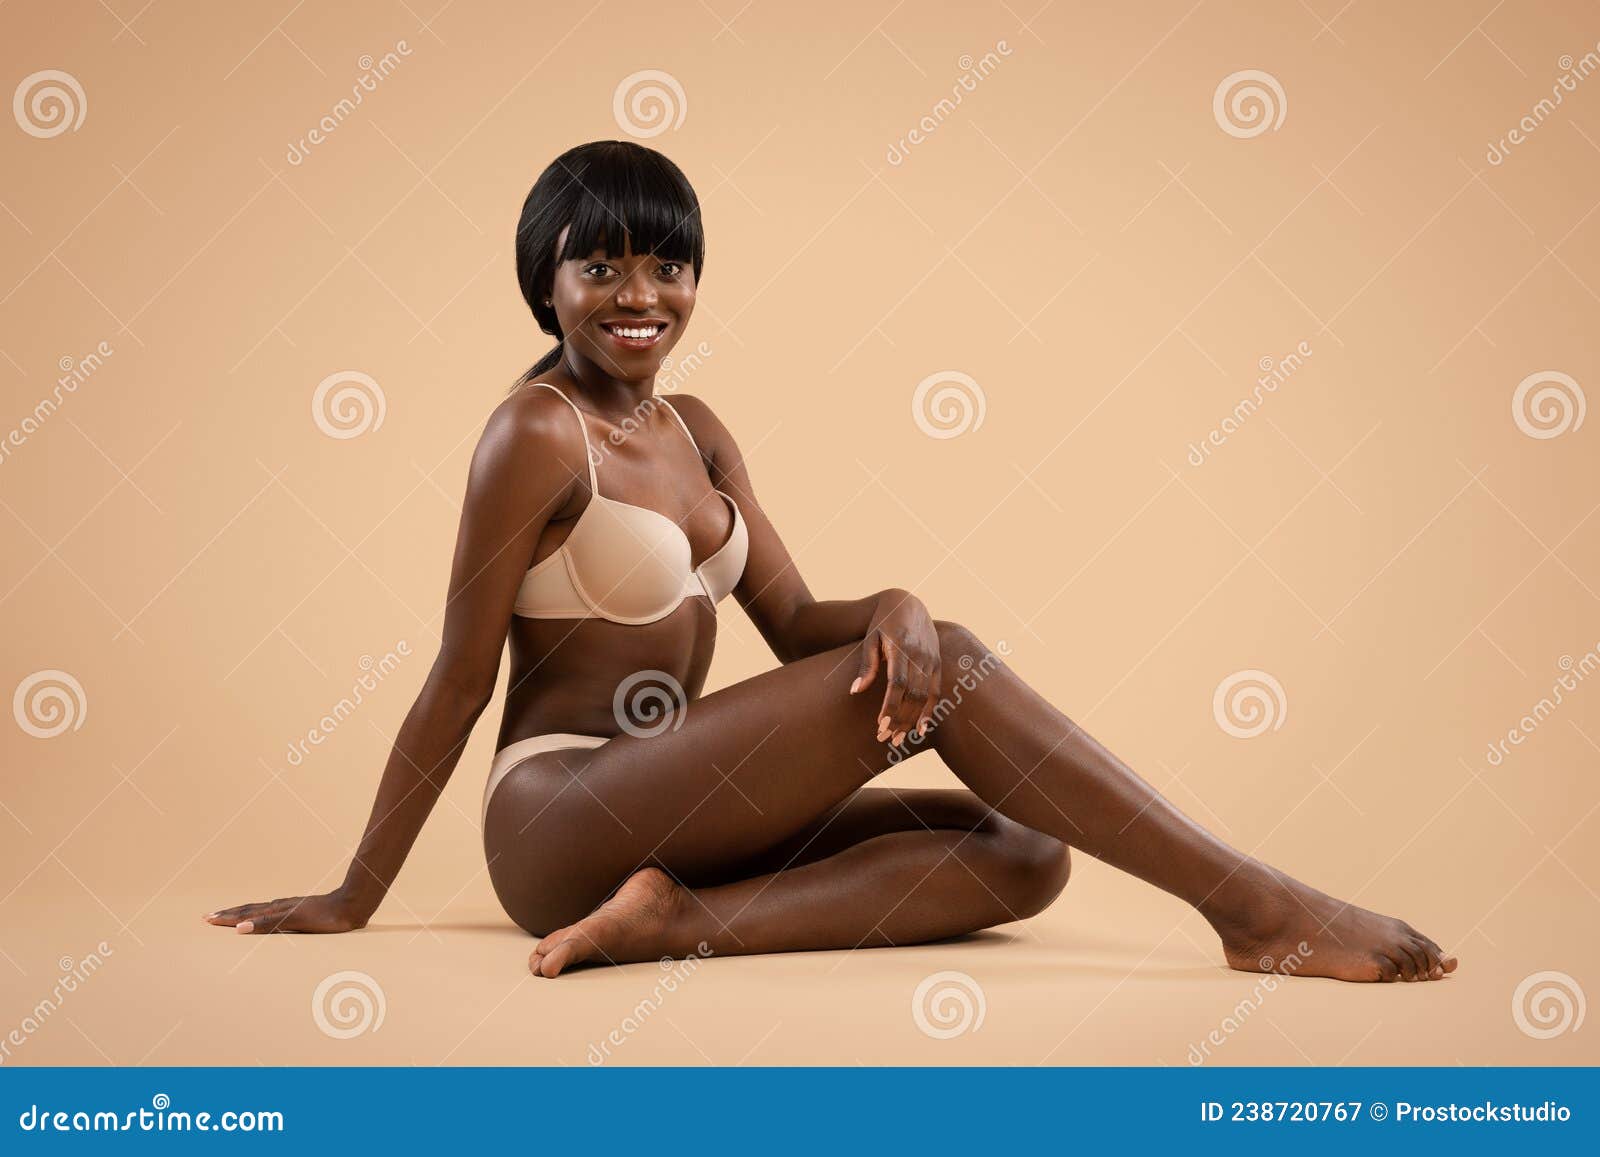 Cheerful Attractive Black Lady Posing in Underwear on Beige Stock